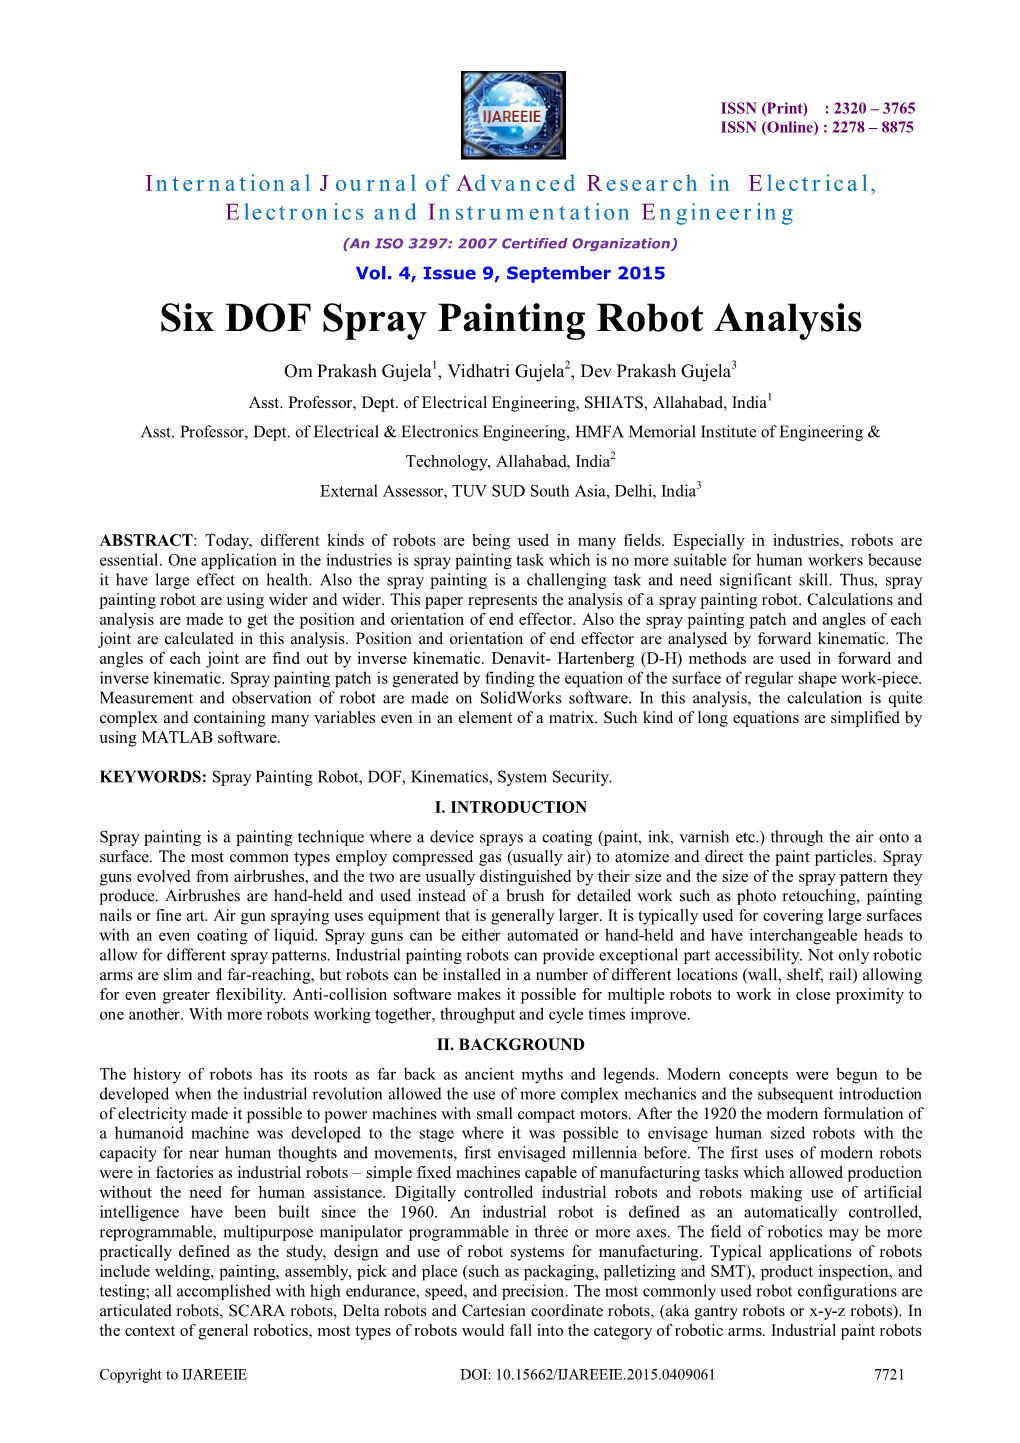 Six DOF Spray Painting Robot Analysis